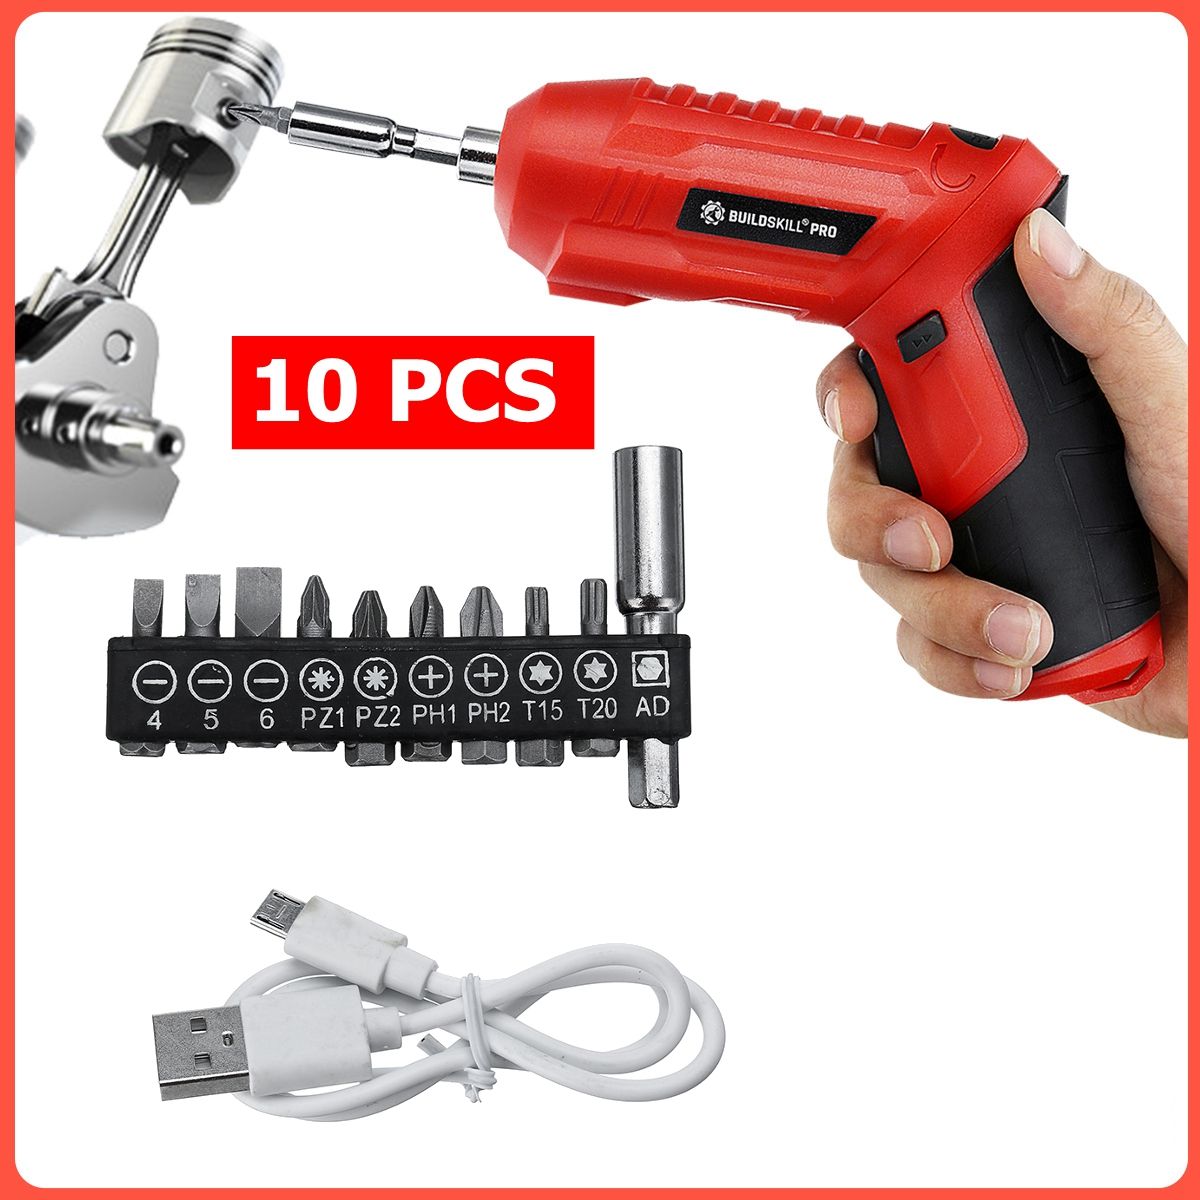 USB-Electric-Screwdriver-Mini-Electric-Drill-Set-DIY-Screw-Driver-Rechargeable-Li-ion-Battery-Cordle-1551940